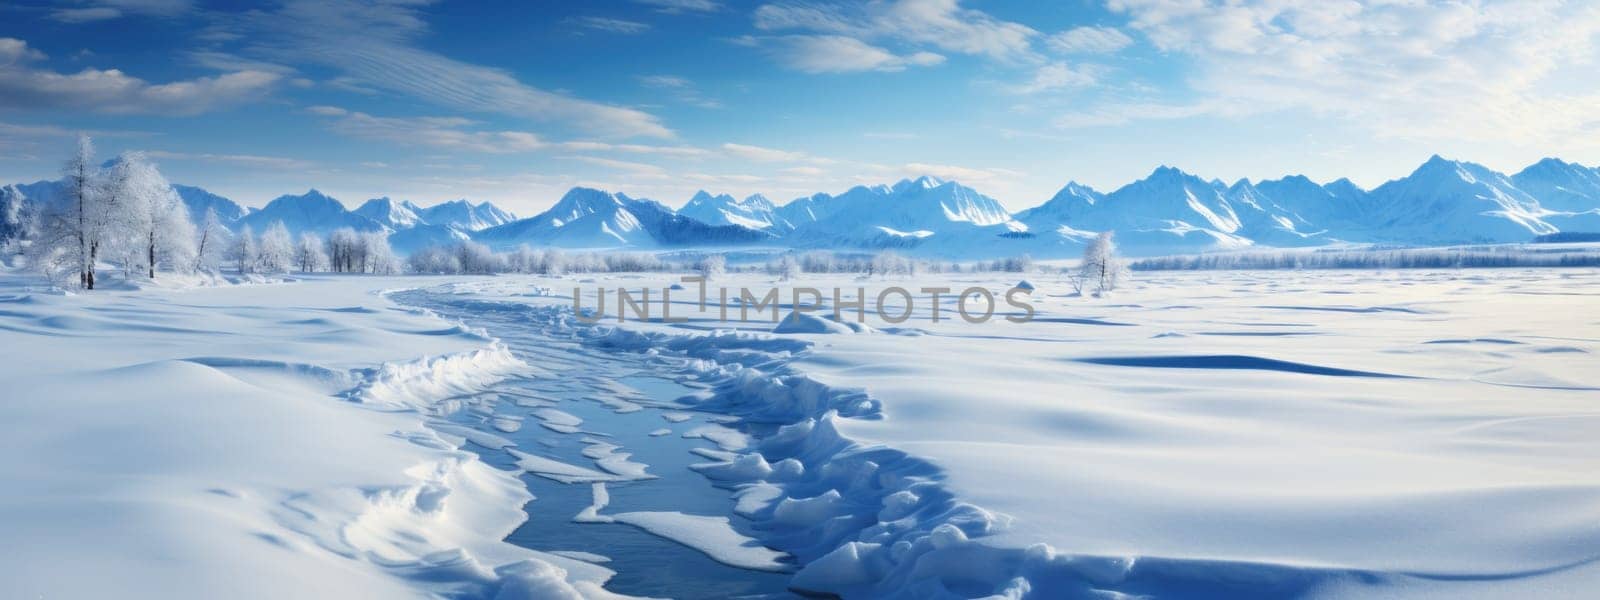 Frozen wasteland snow mountains panorama, Generate with Ai by prathanchorruangsak